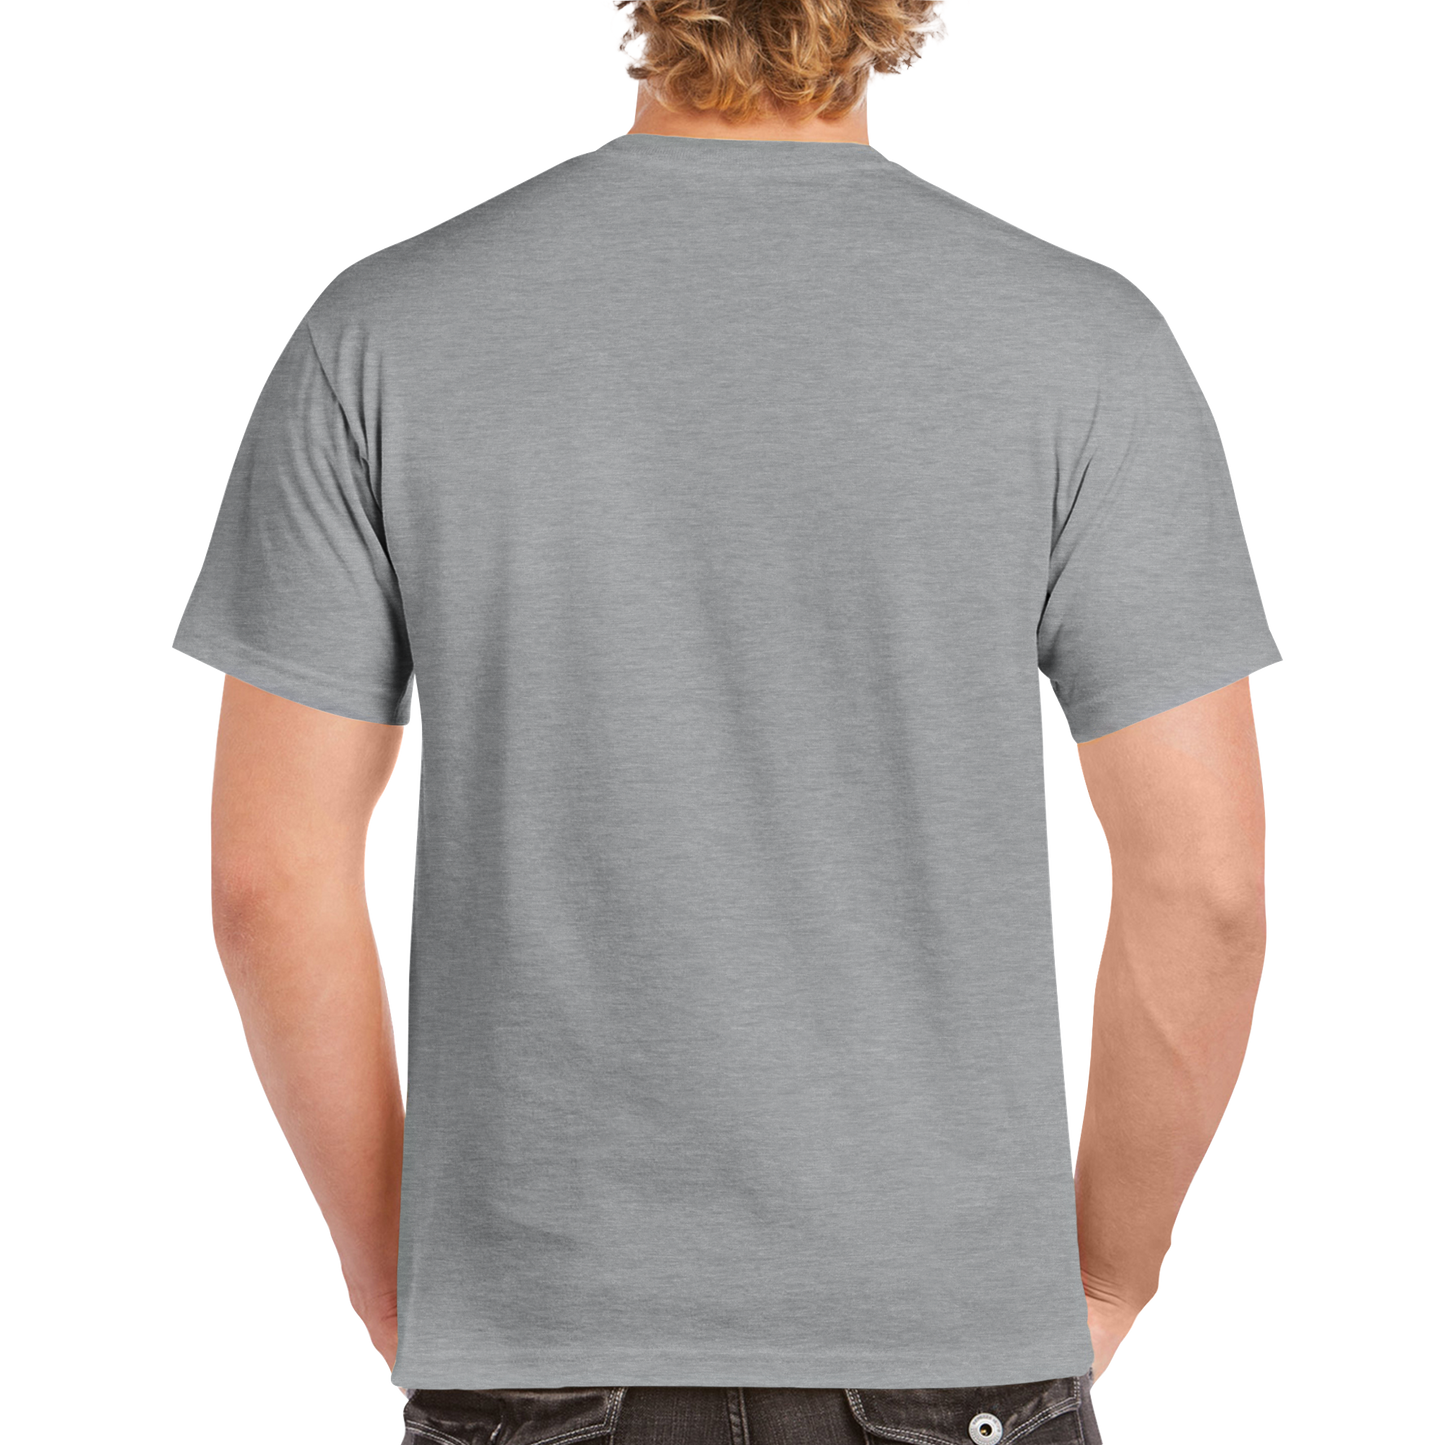 KP 2024 Heavyweight Unisex Crewneck T-shirt